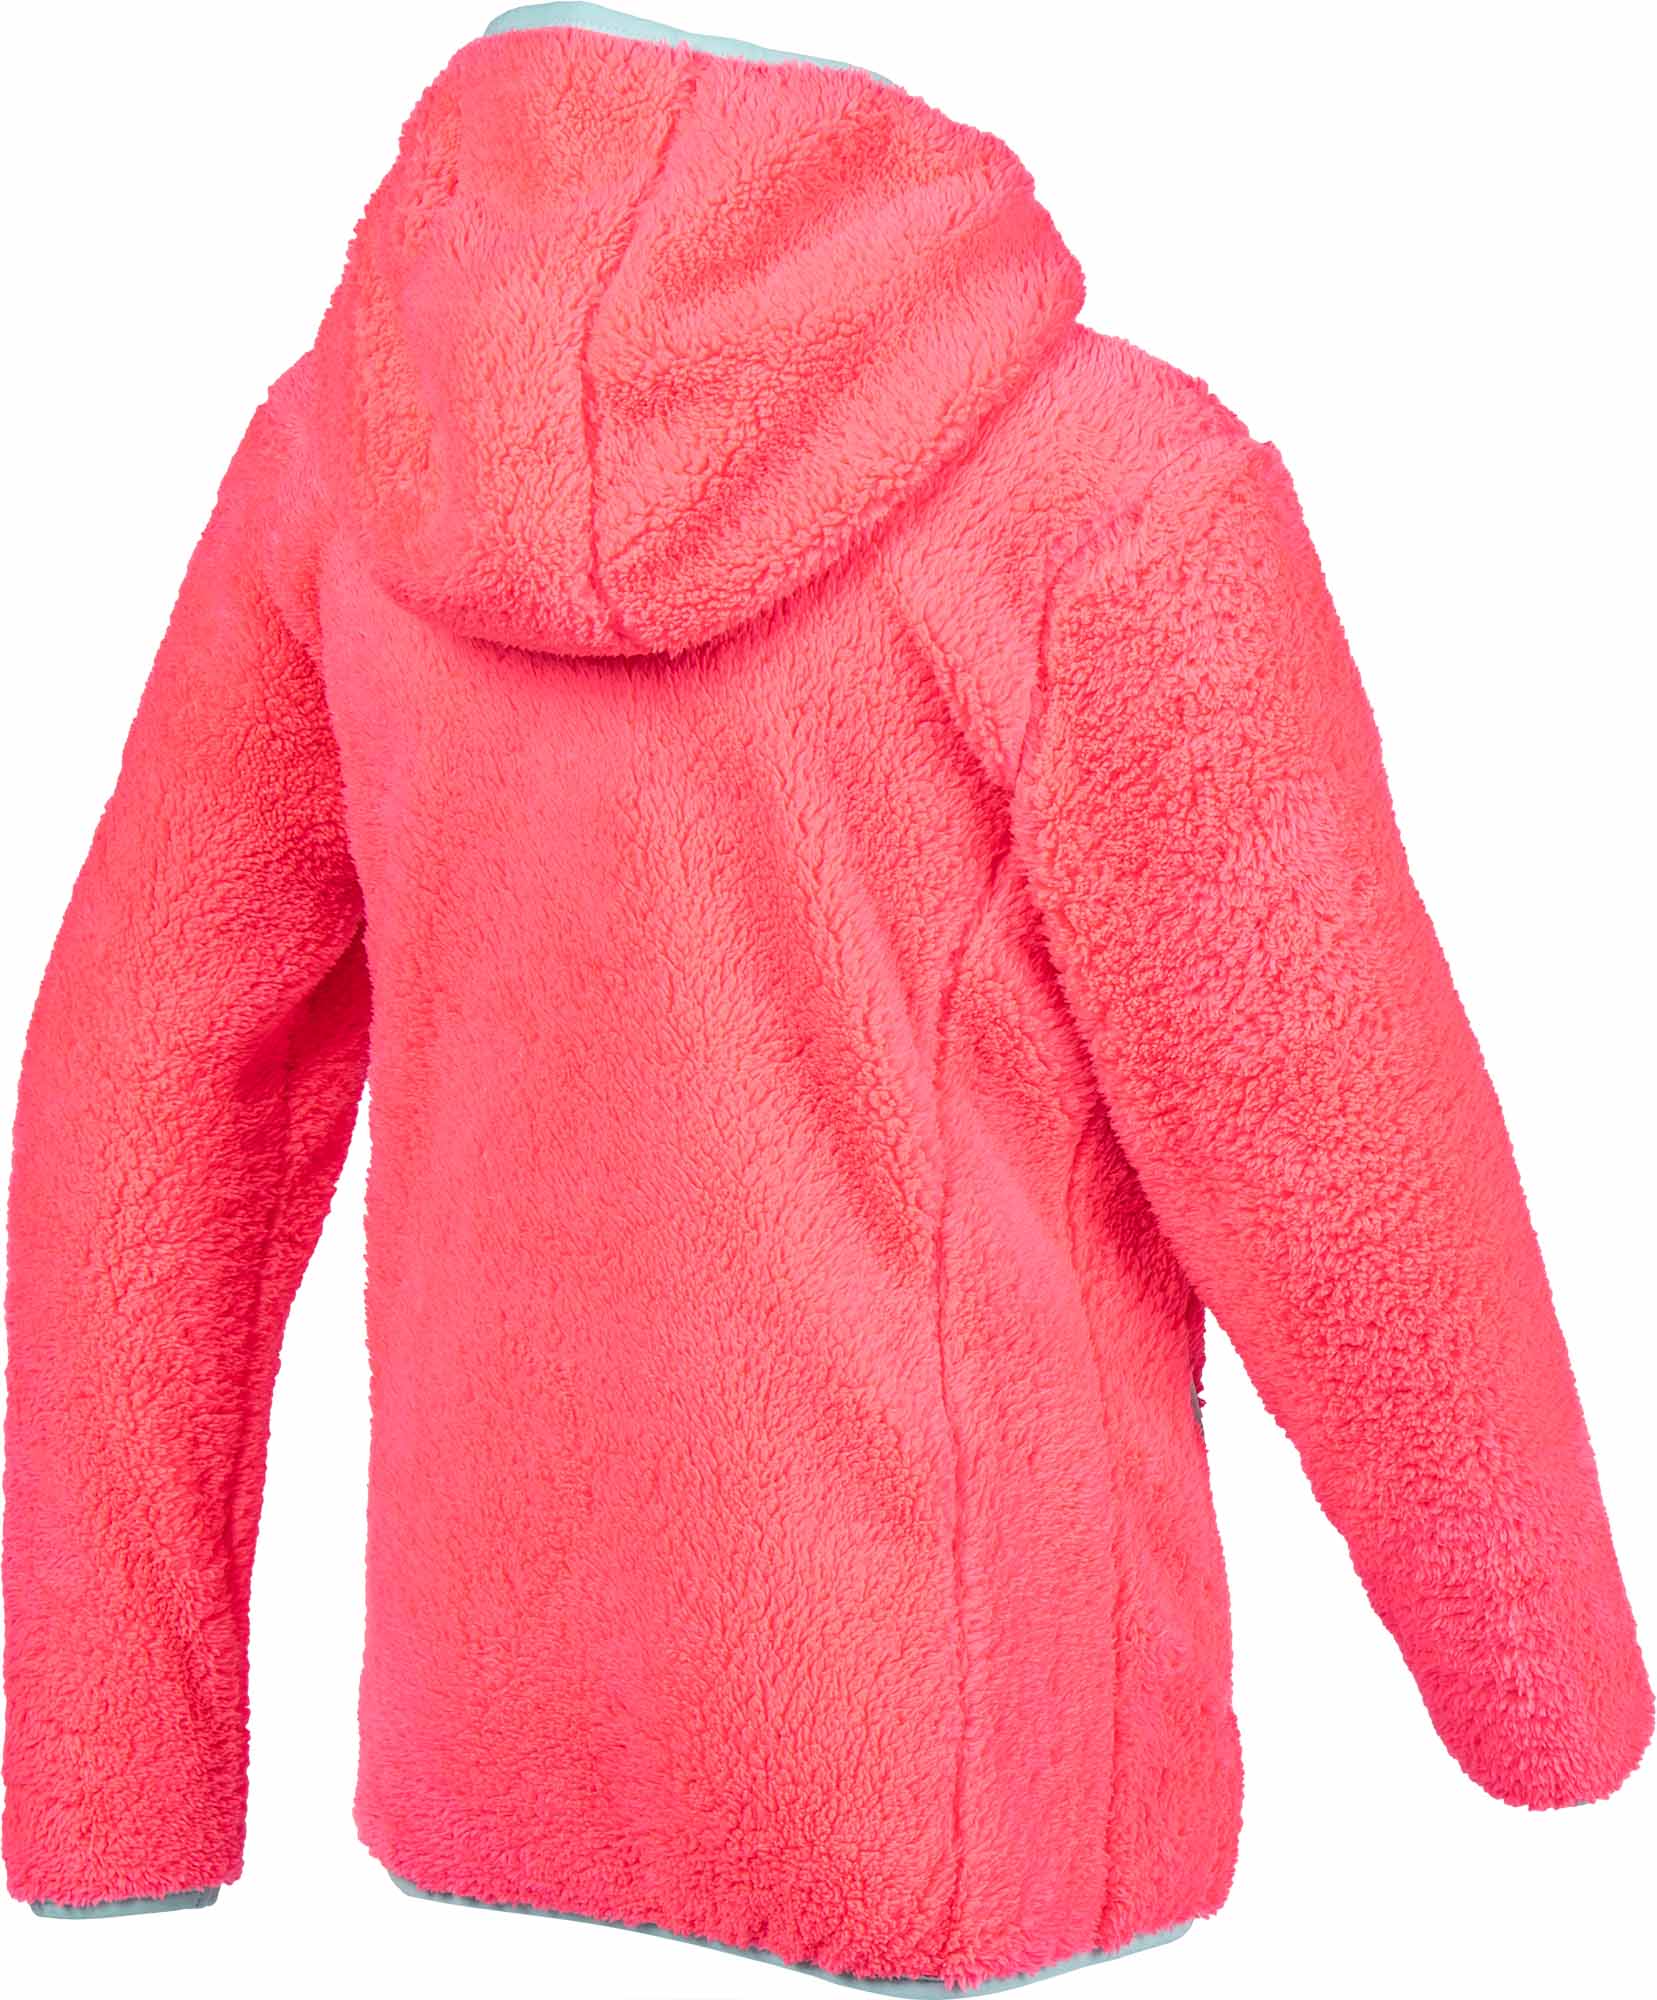 Lány fleece pulóver